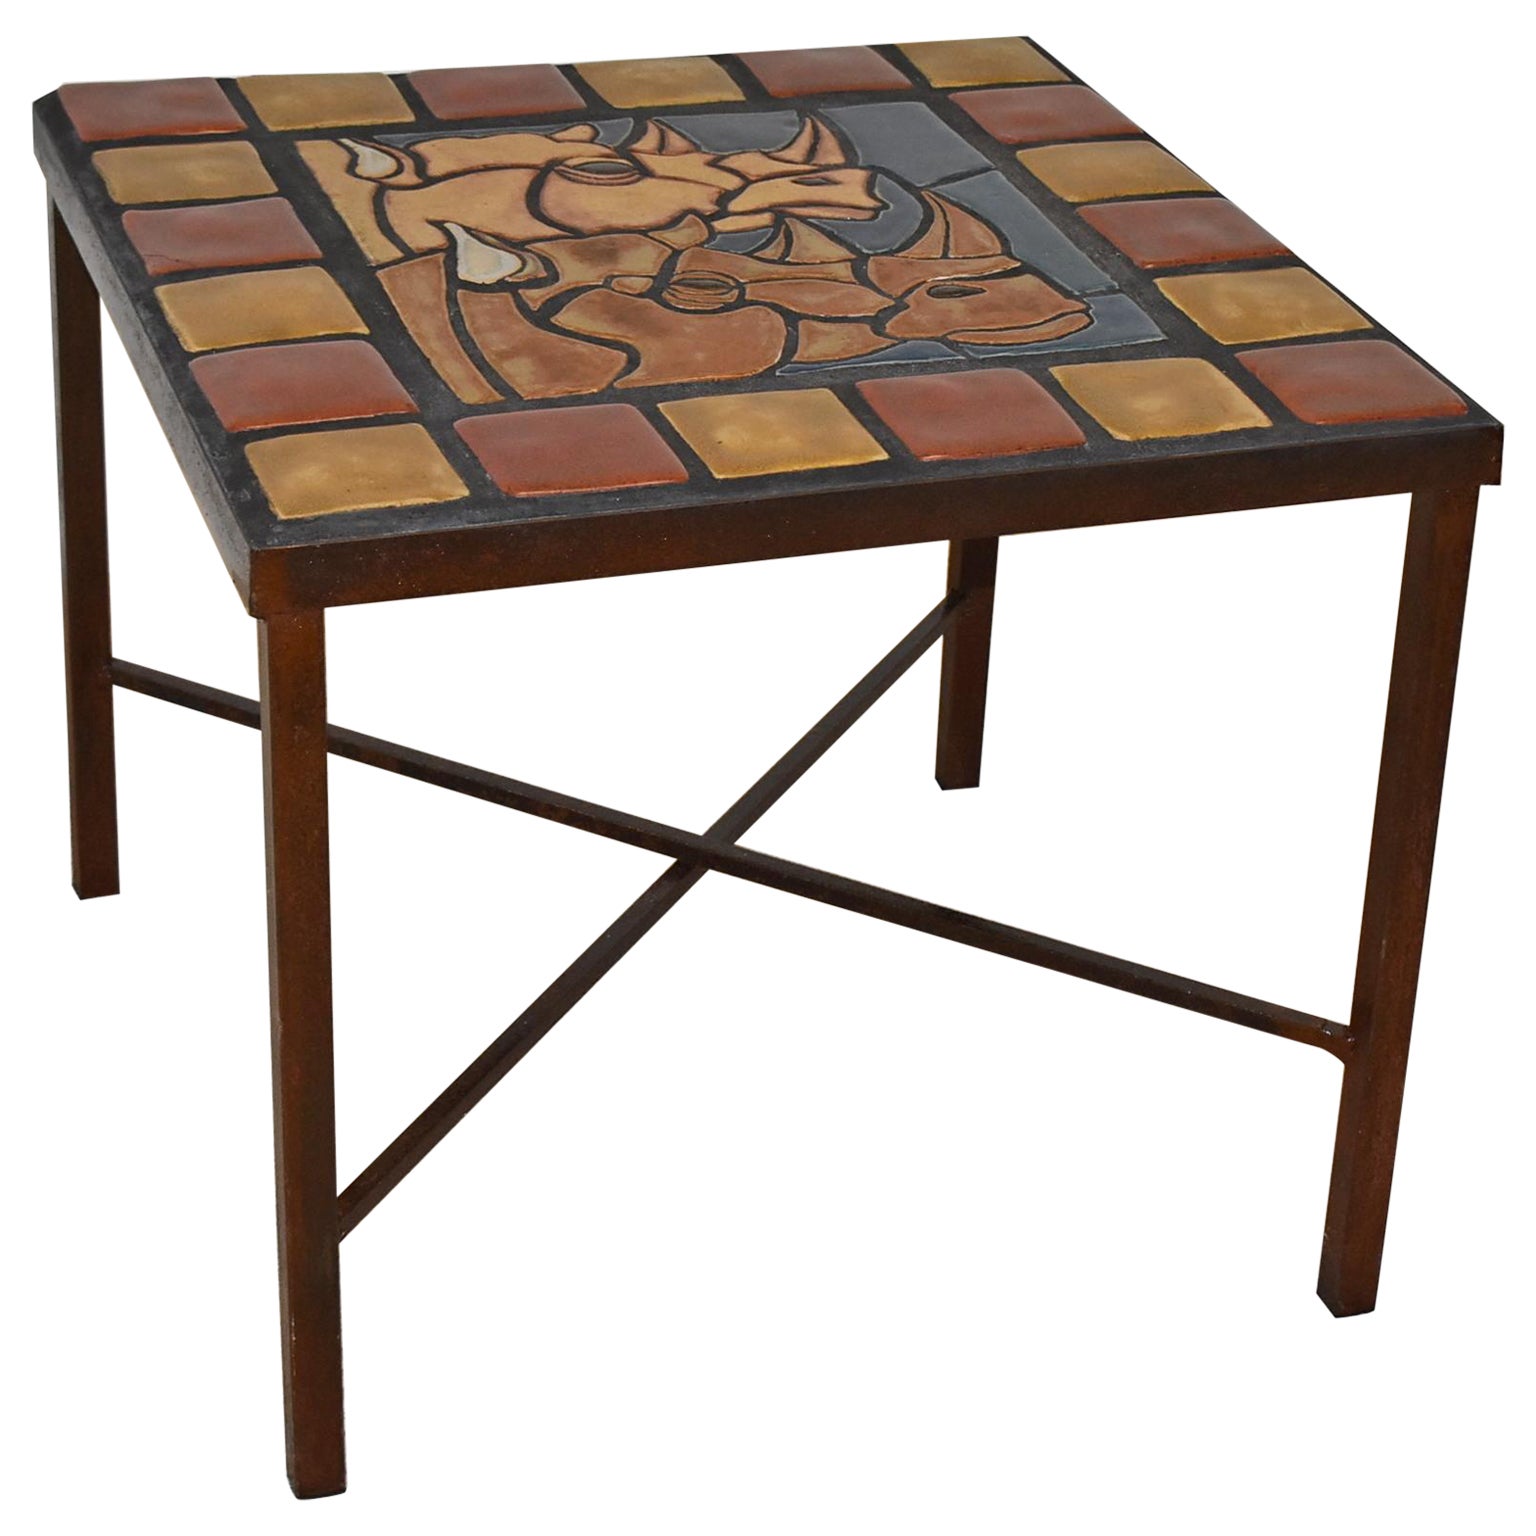 Pewabic Tile Top Side Table For Sale